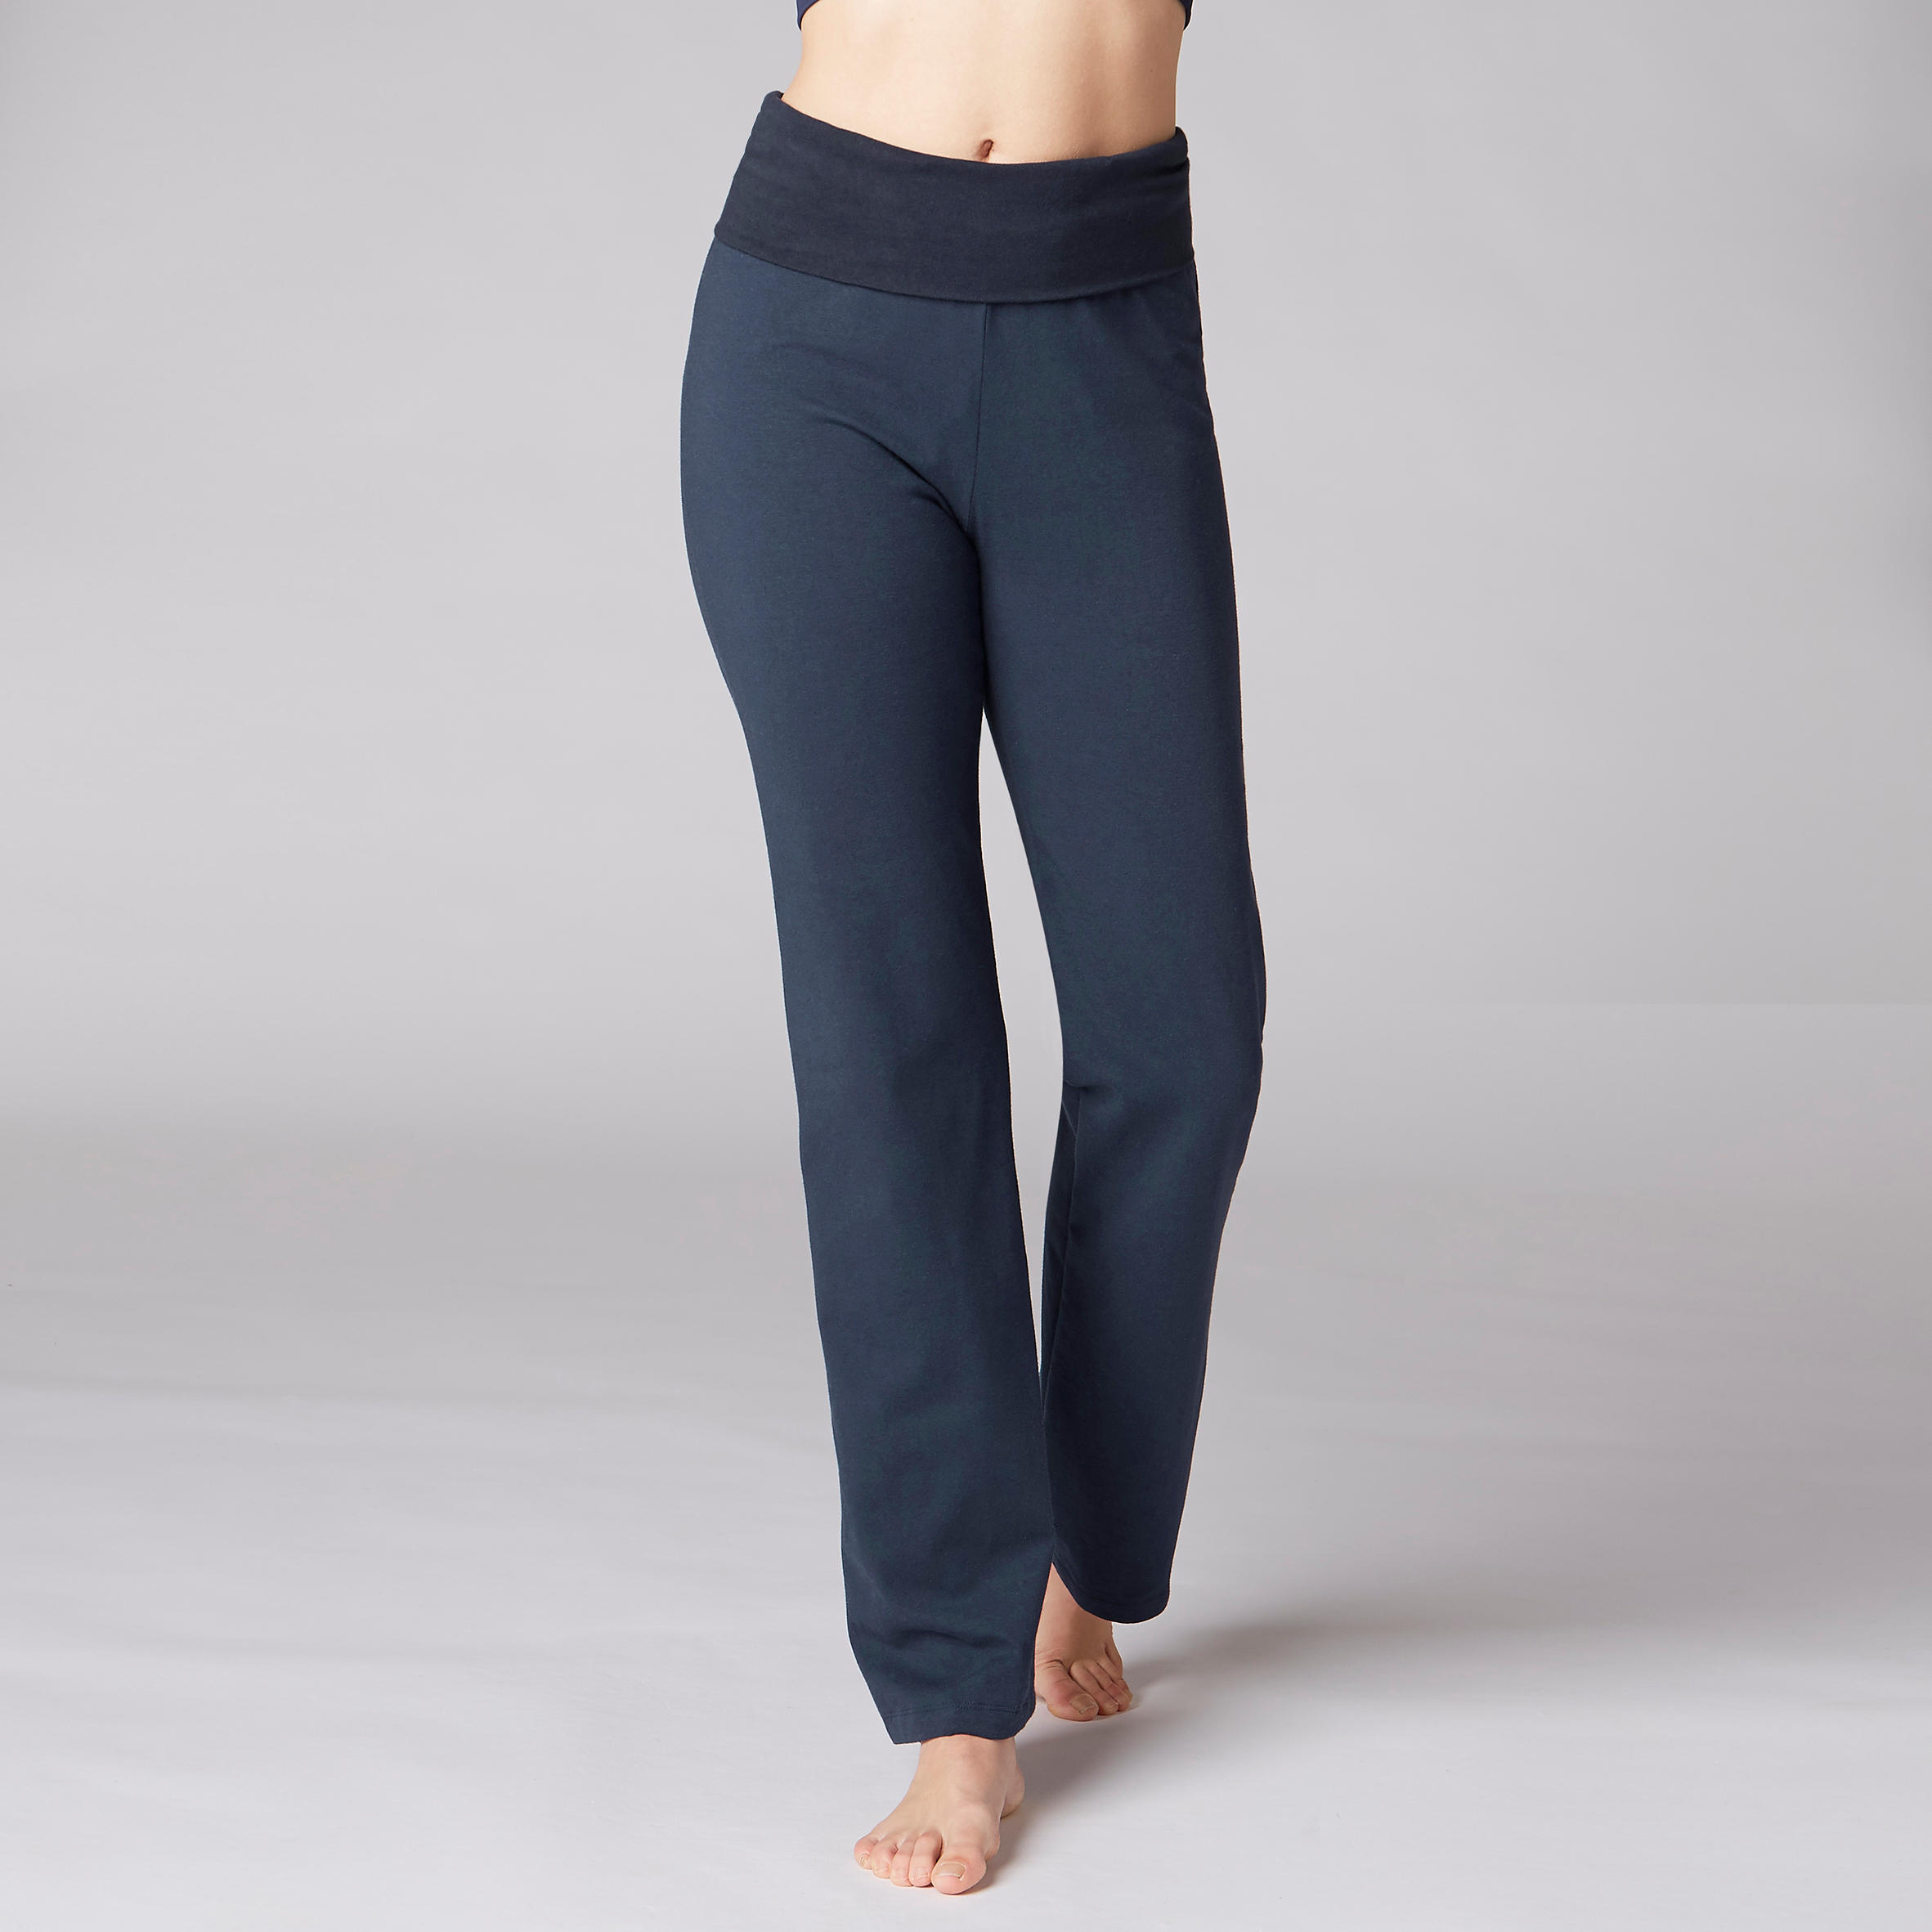 Women's Yoga Cotton Bottoms - Navy 1/12